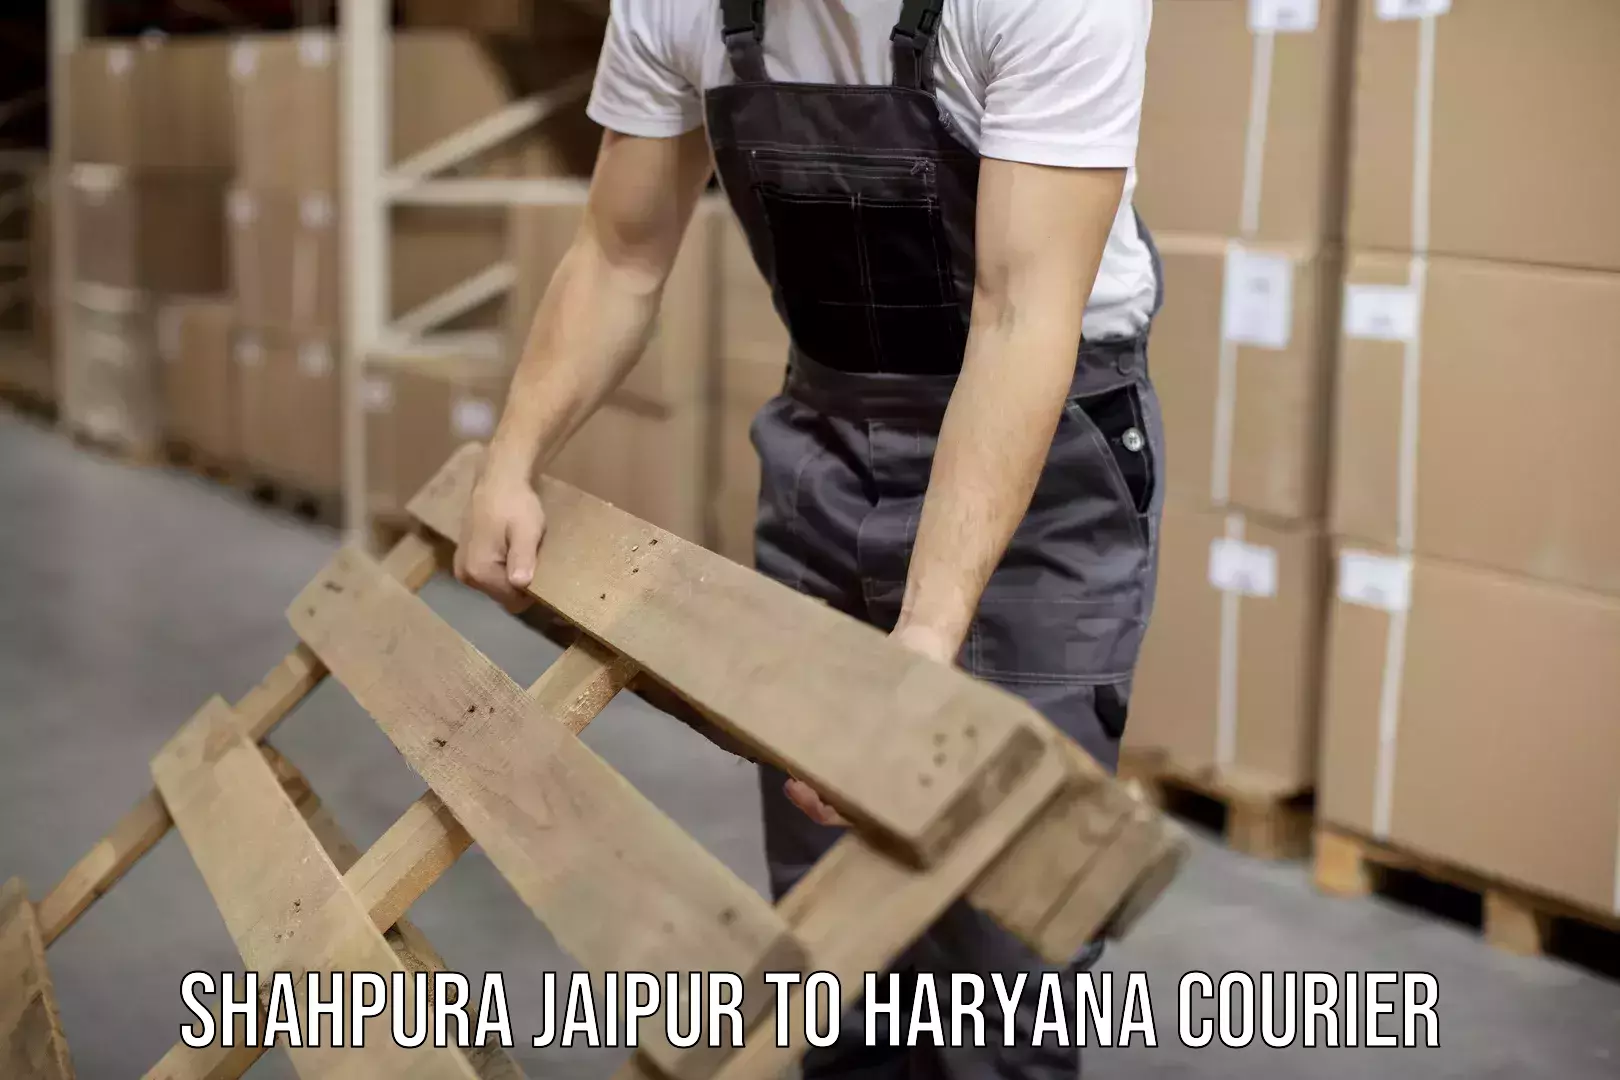 Courier service partnerships Shahpura Jaipur to Panchkula